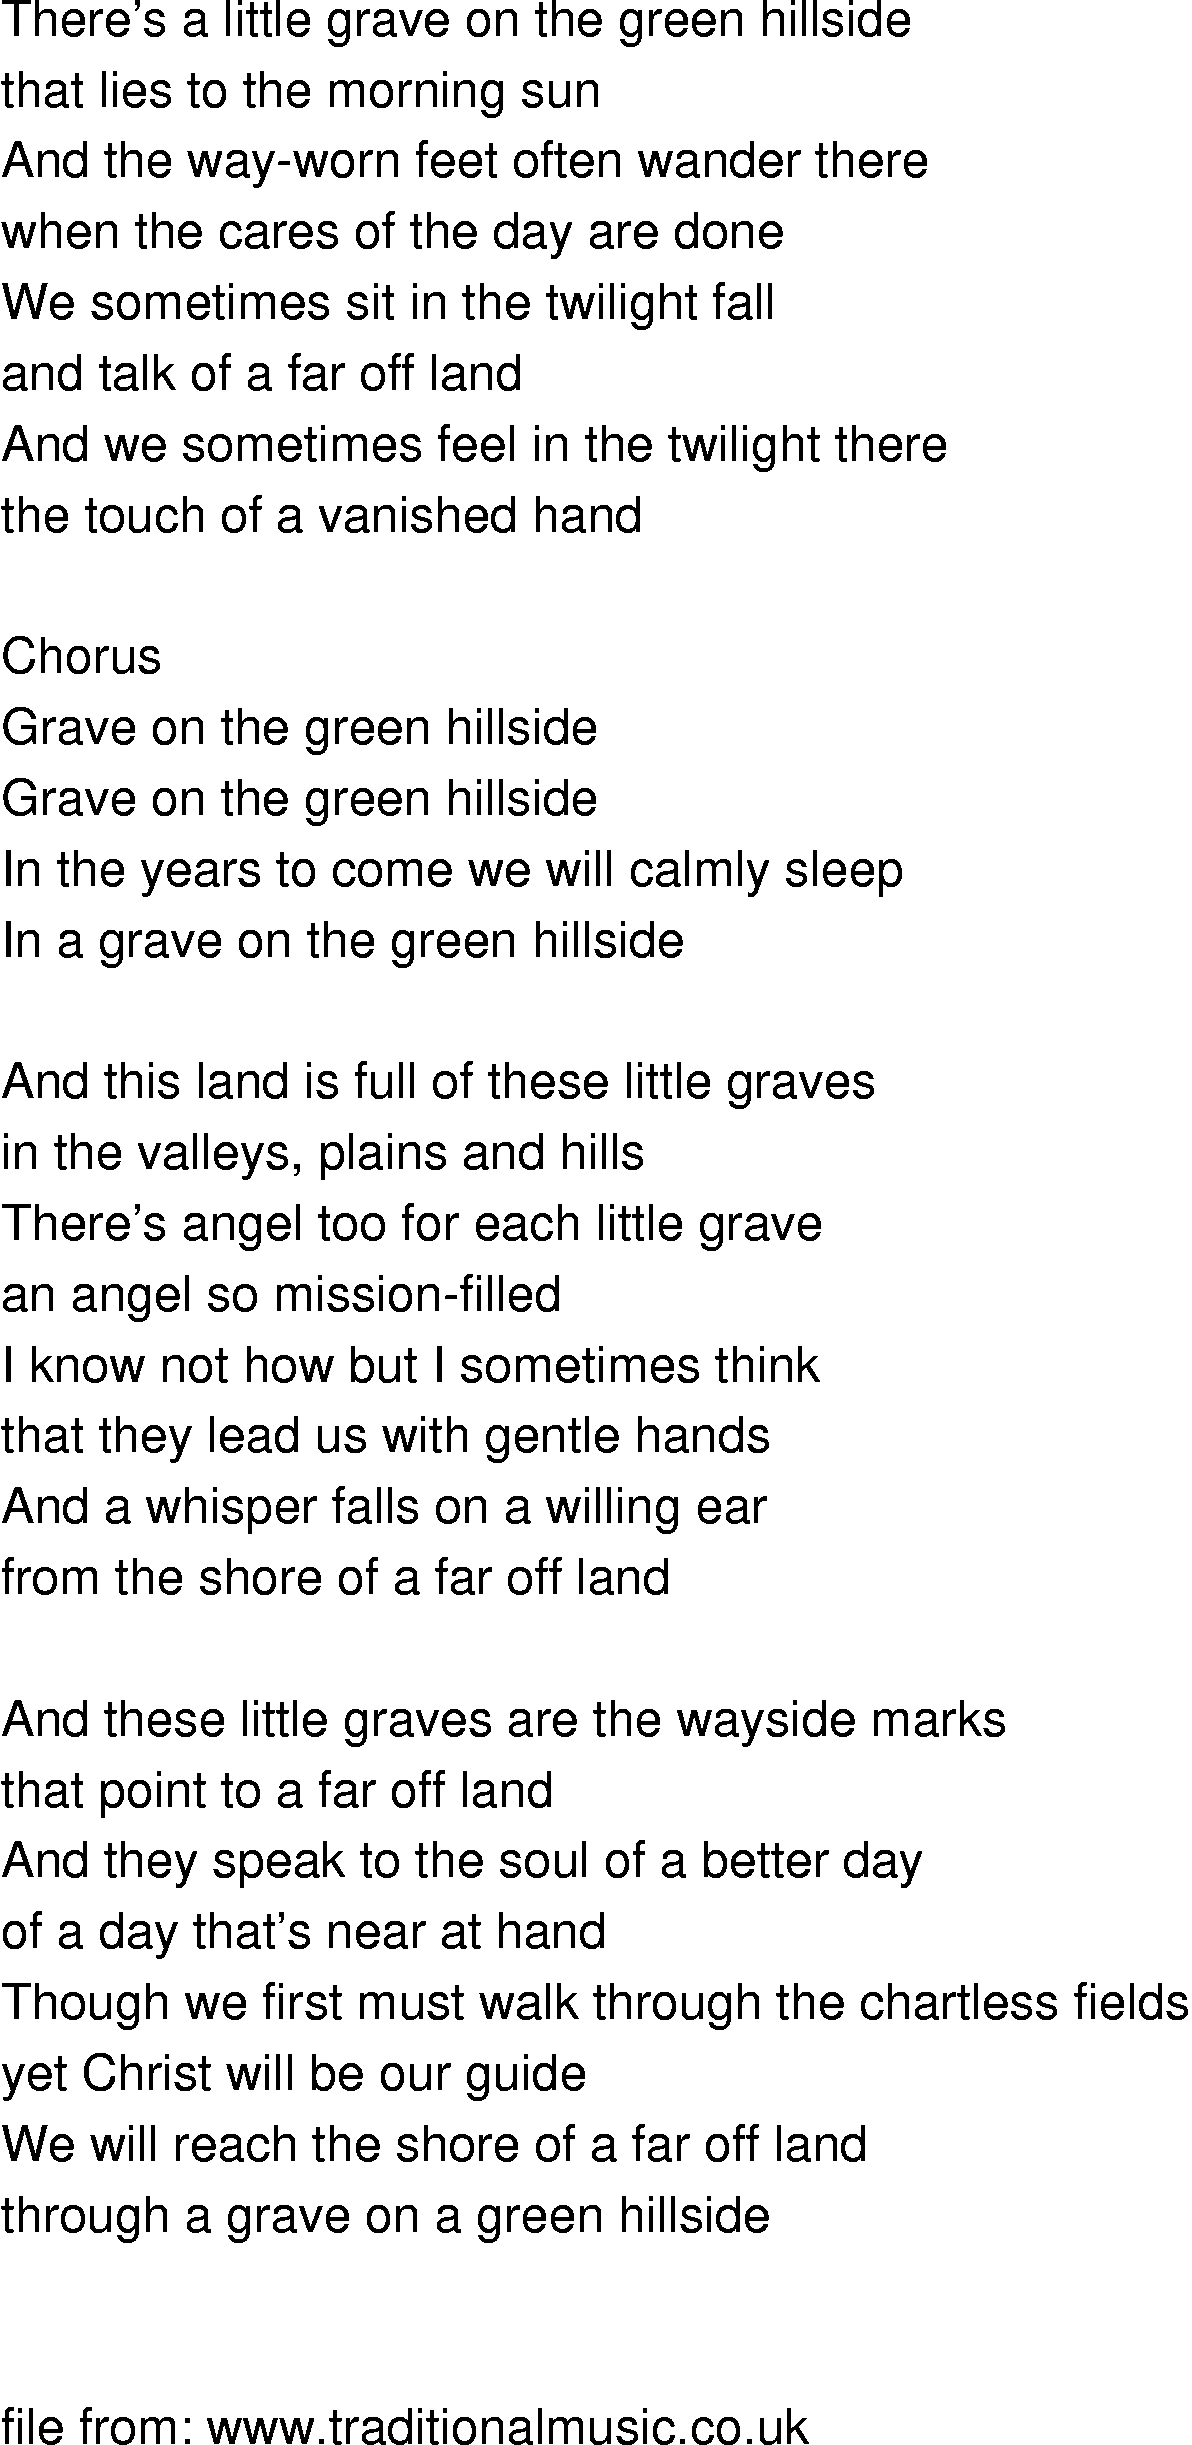 Old-Time (oldtimey) Song Lyrics - grave on the green hillside